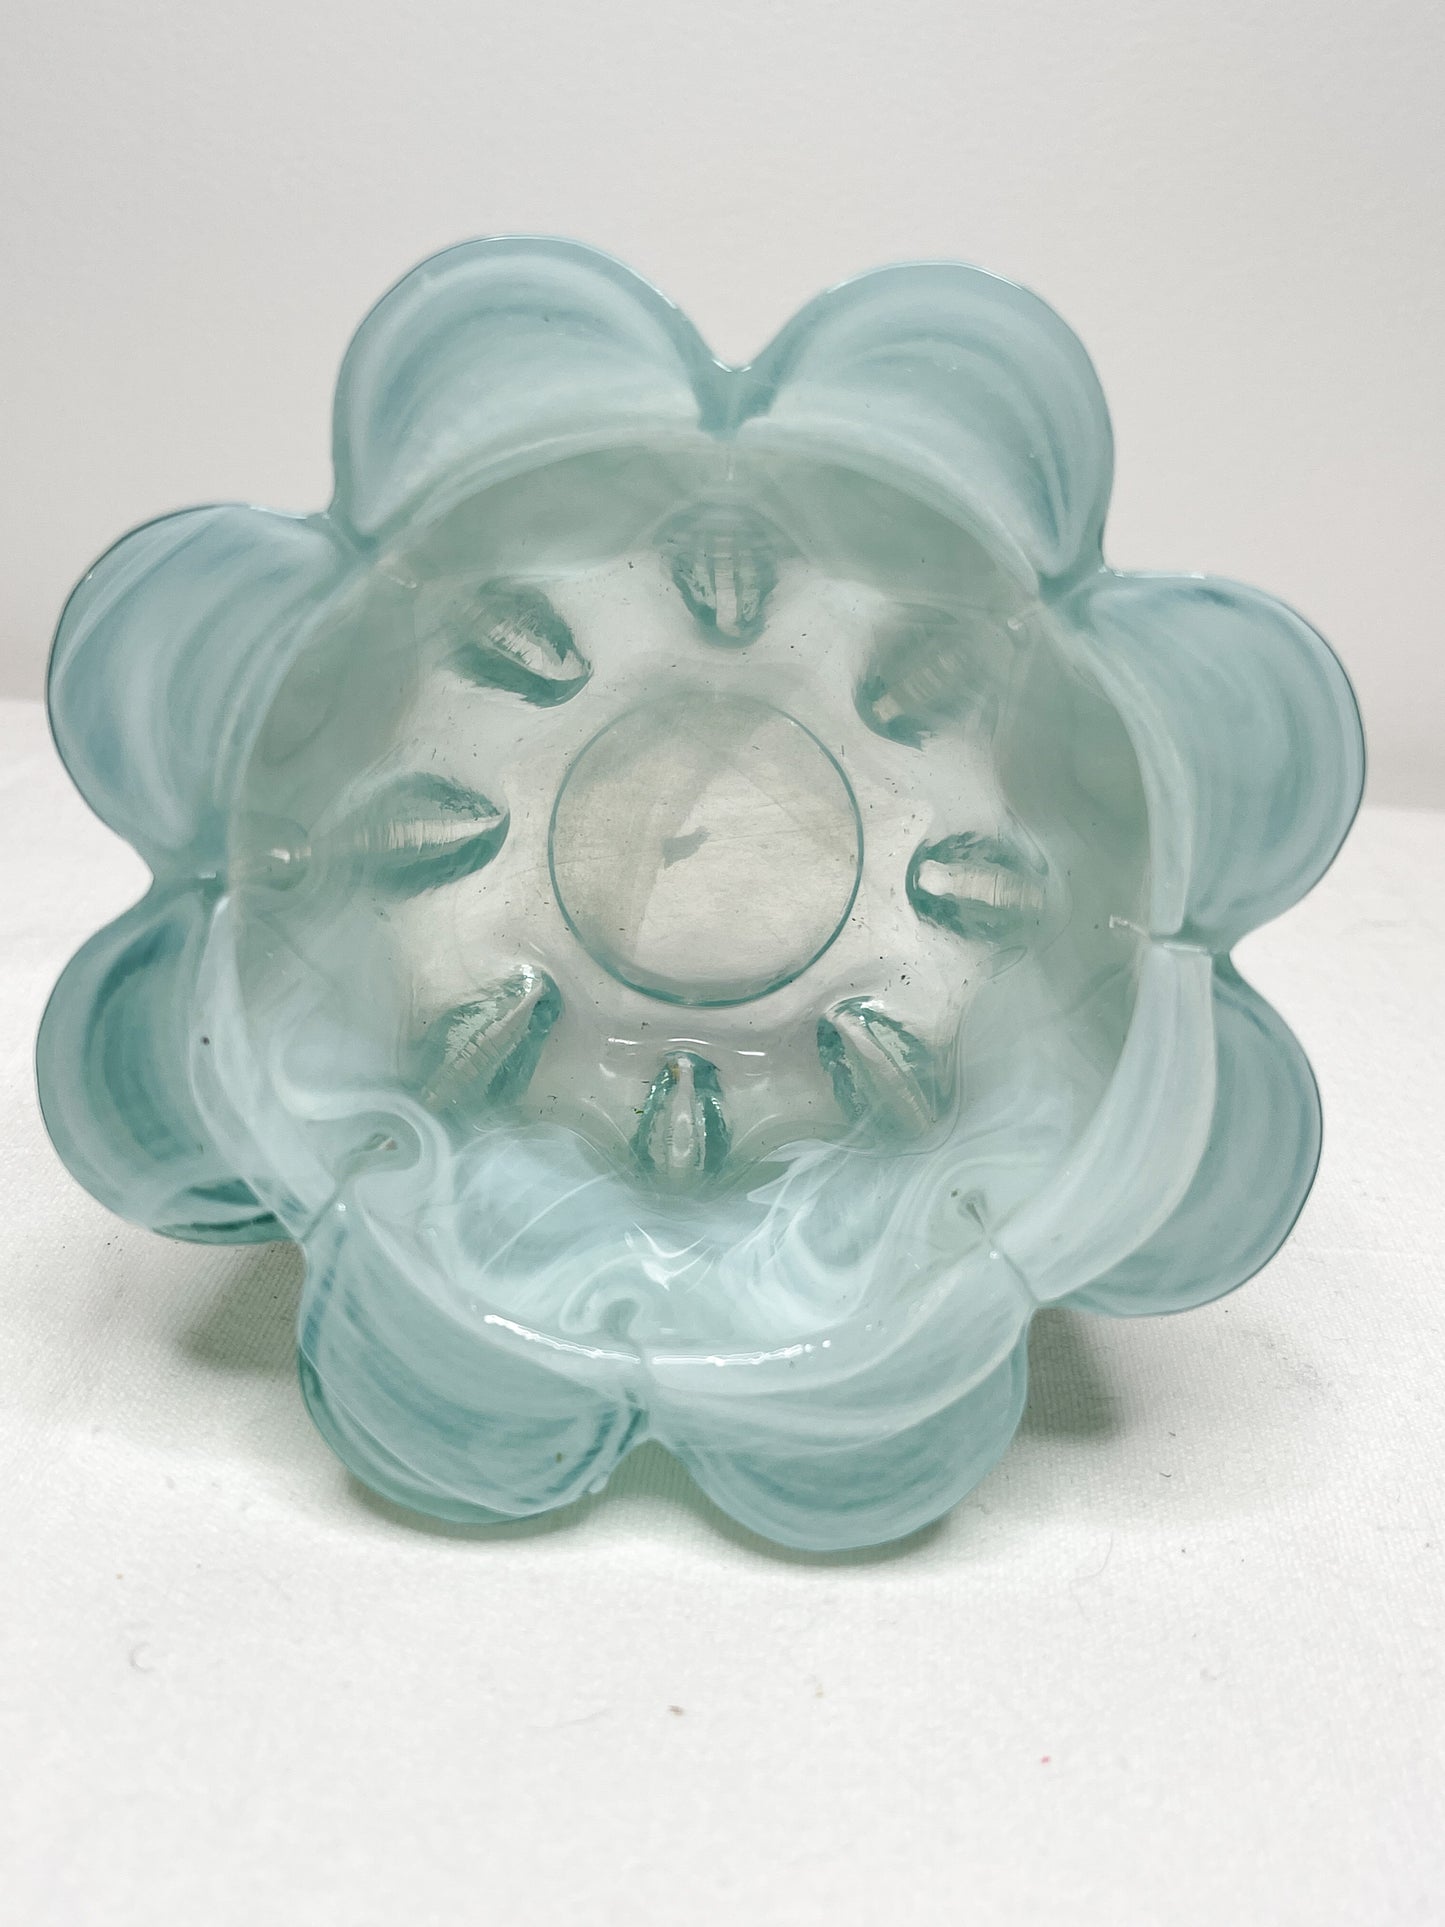 Vintage Teal Swirl Art Glass Votive Candle Holder| Swirl Aqua glass Flower Shaped Glass Vase